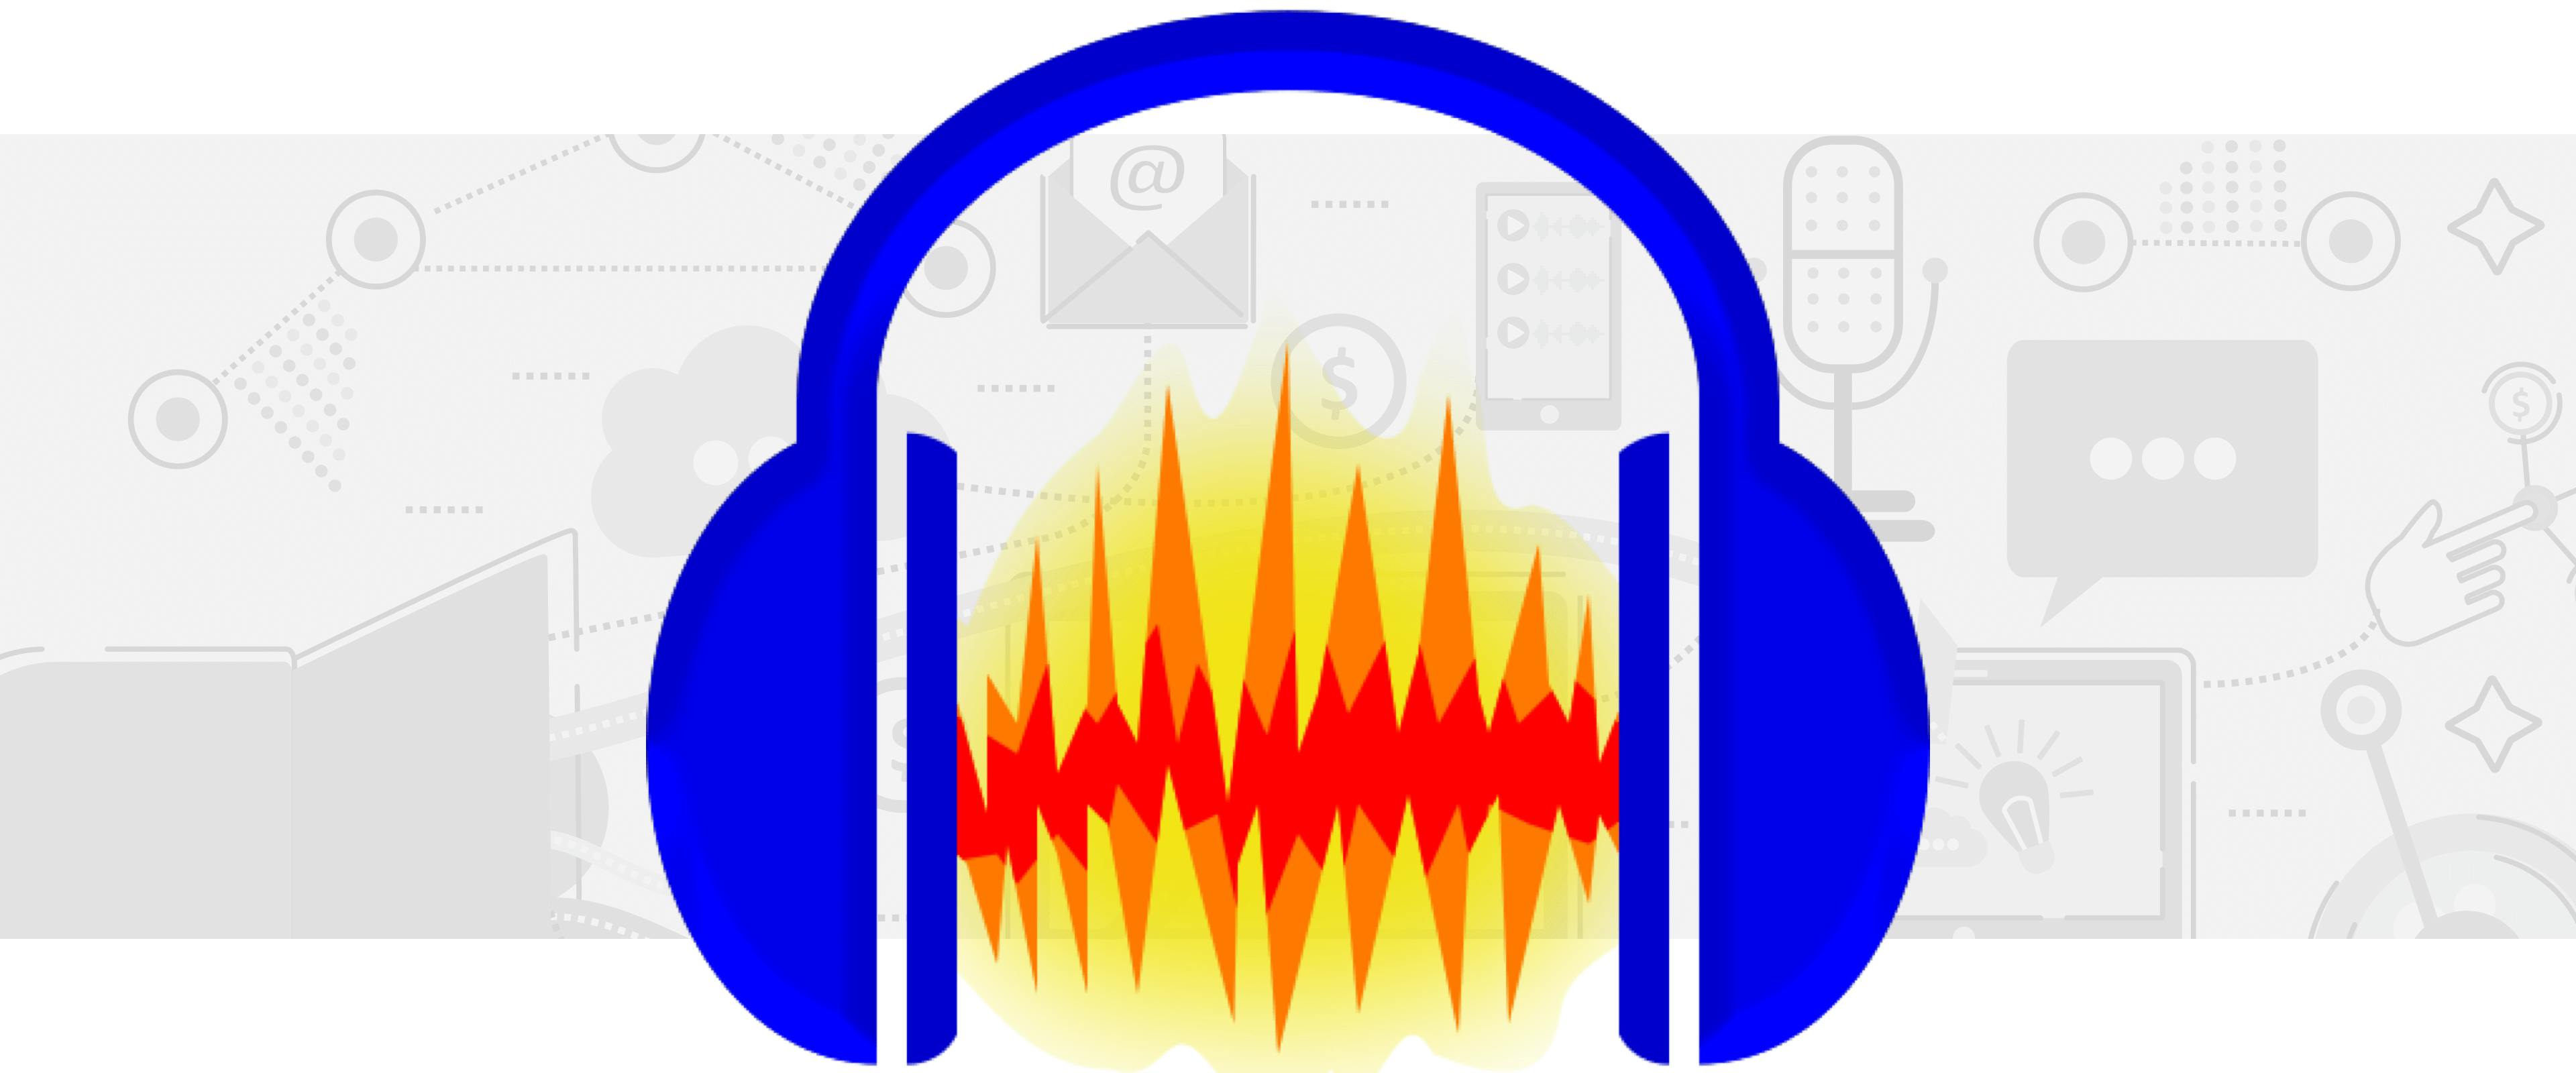 Audacity logo with blue headphones and waveform 